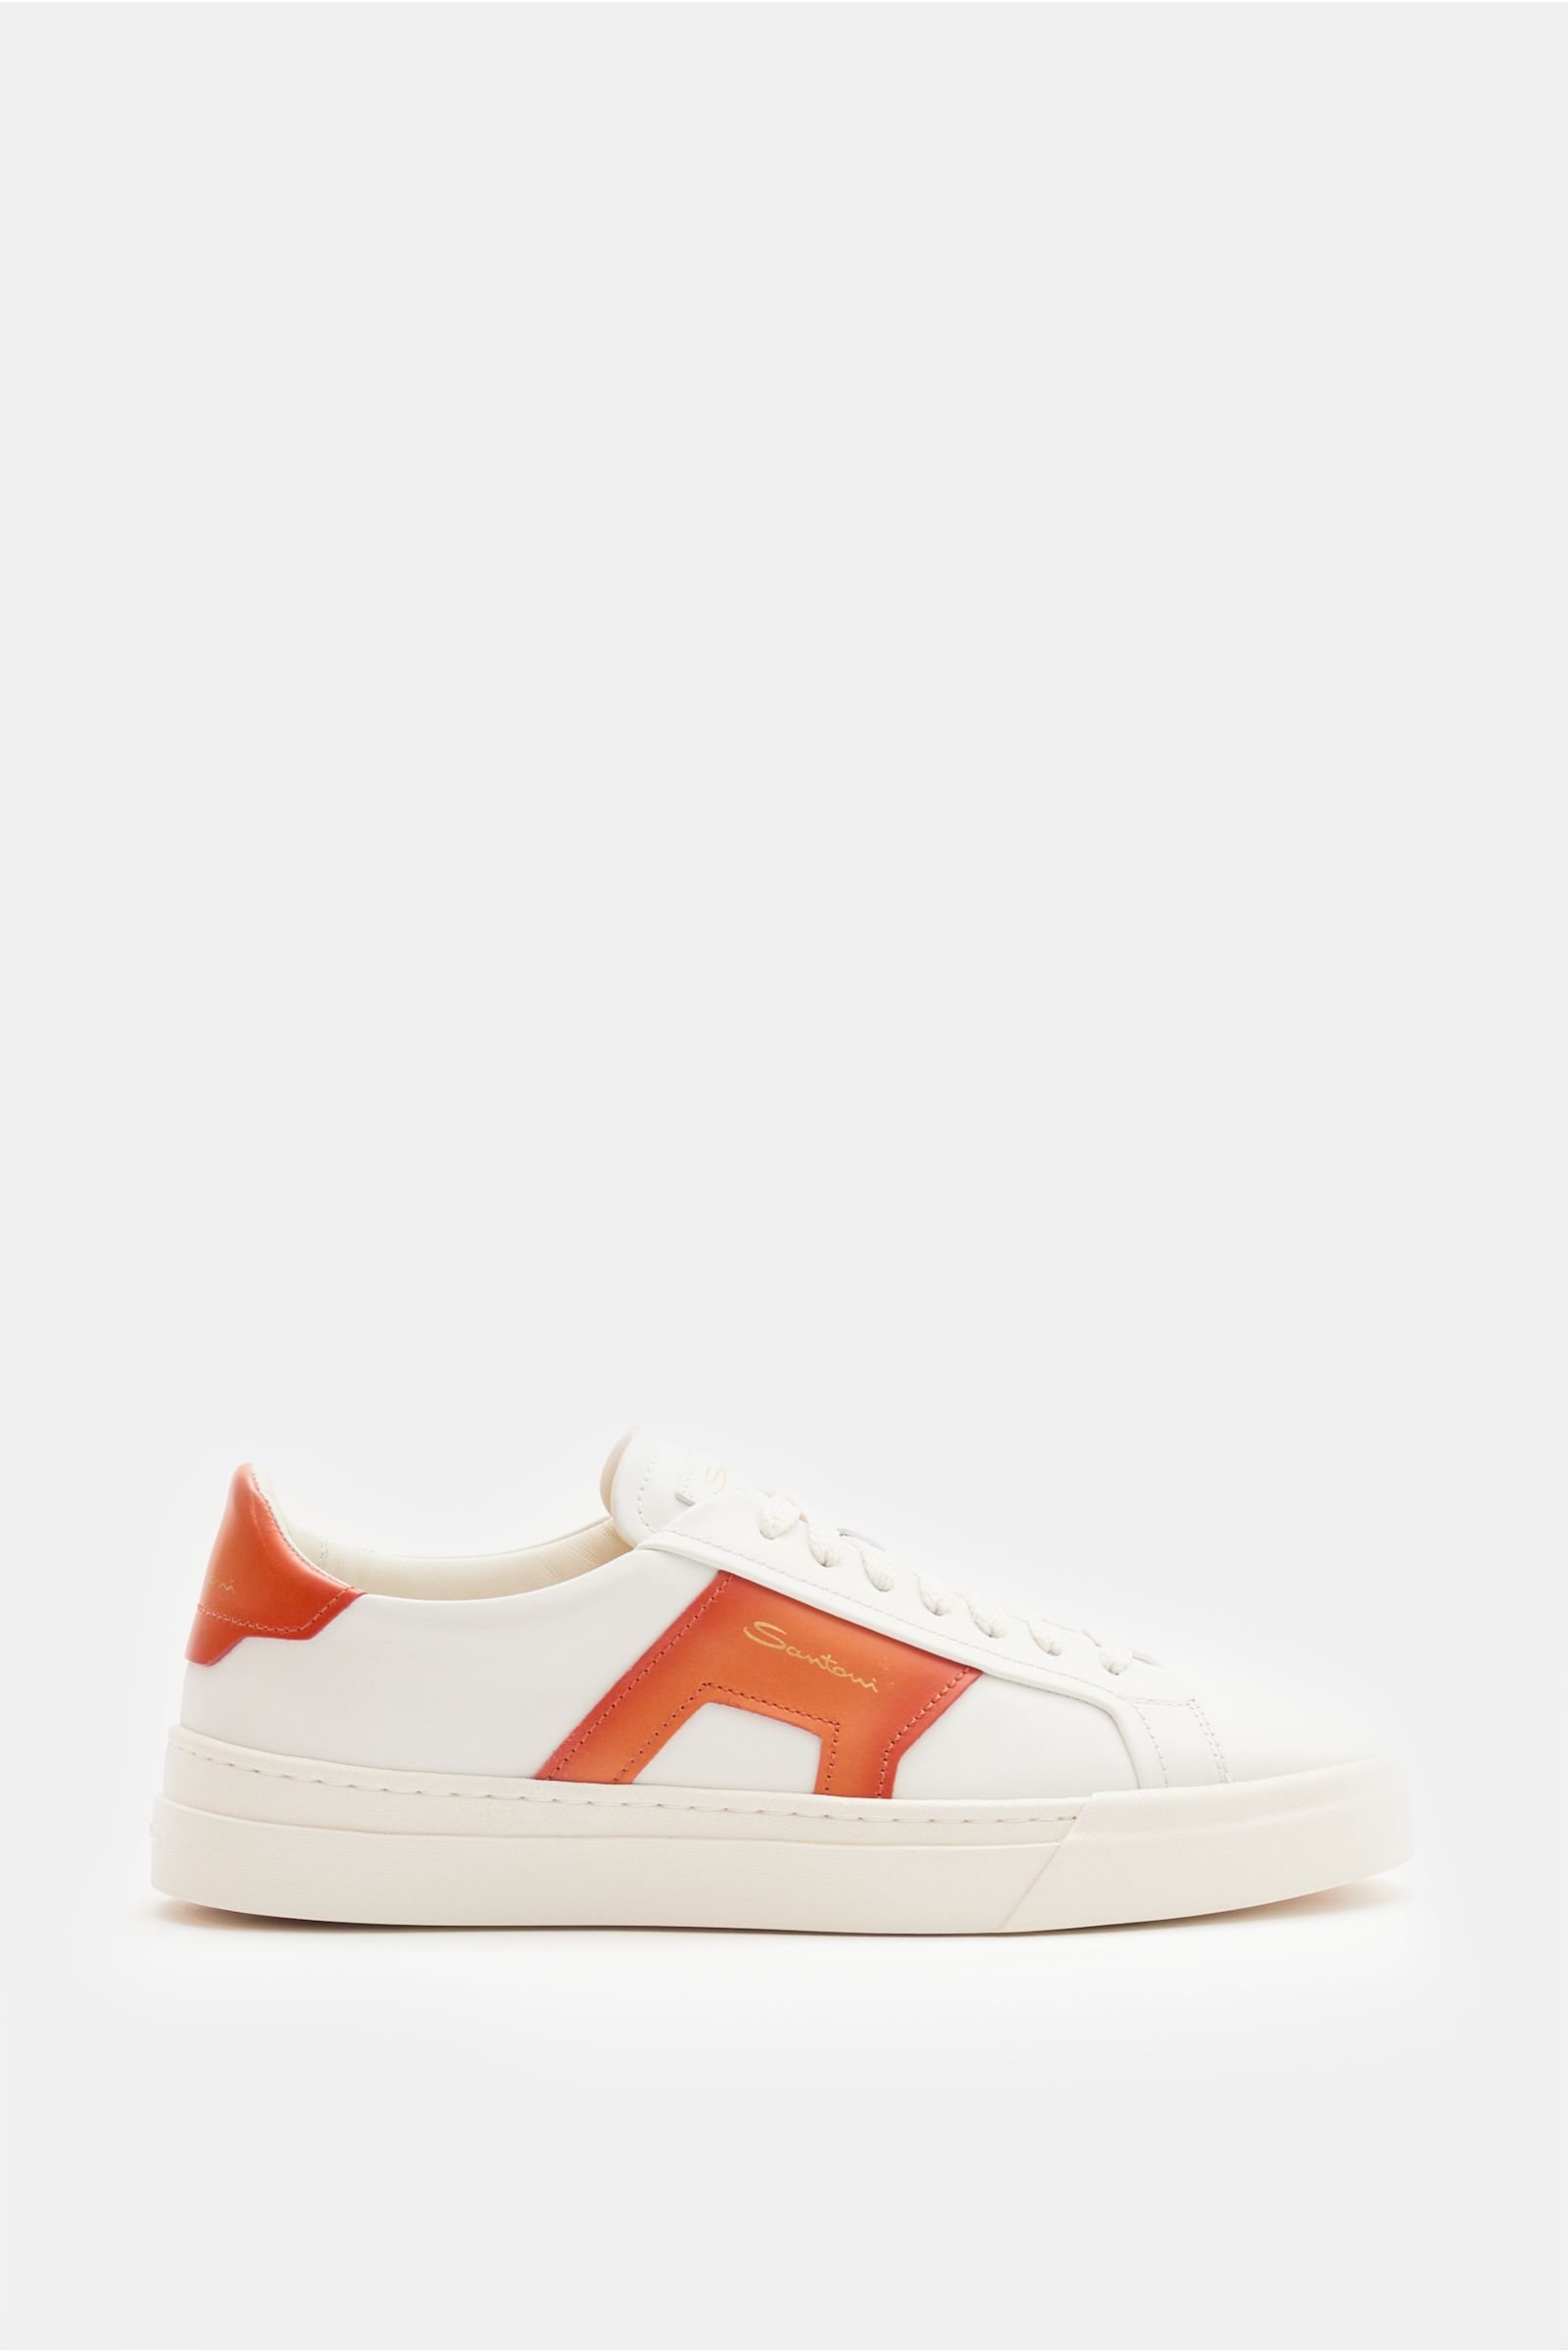 Sneakers 'Double Buckle' orange/white